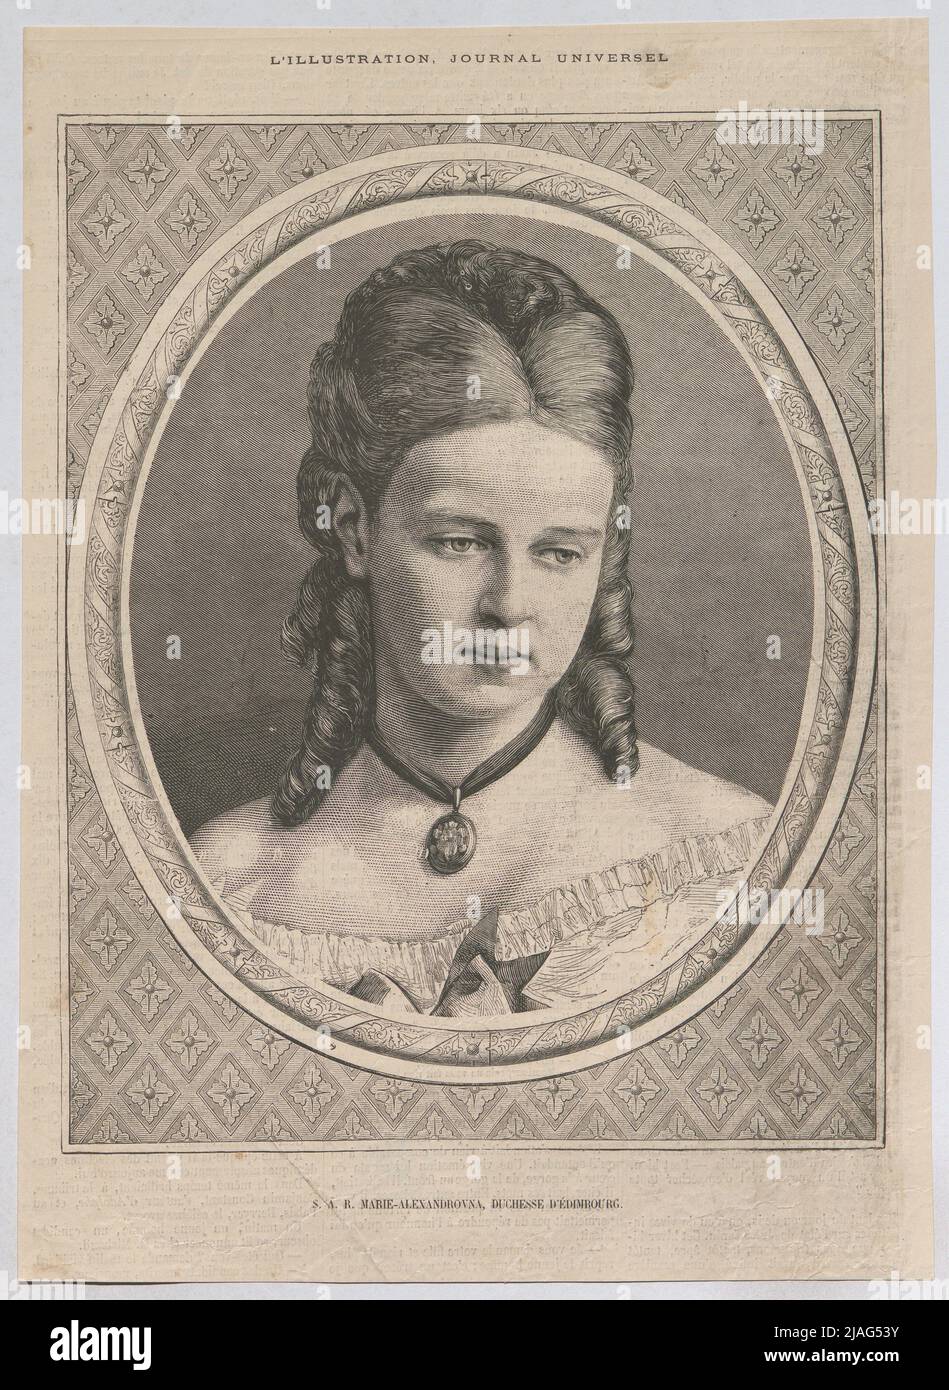 S. A. R. Marie-Alexndrovna, Duchesse d'edimbourg. '. Gran Duquesa Marie Alexandrowna de Rusia, Duquesa de Edimburgo. Desconocido Foto de stock